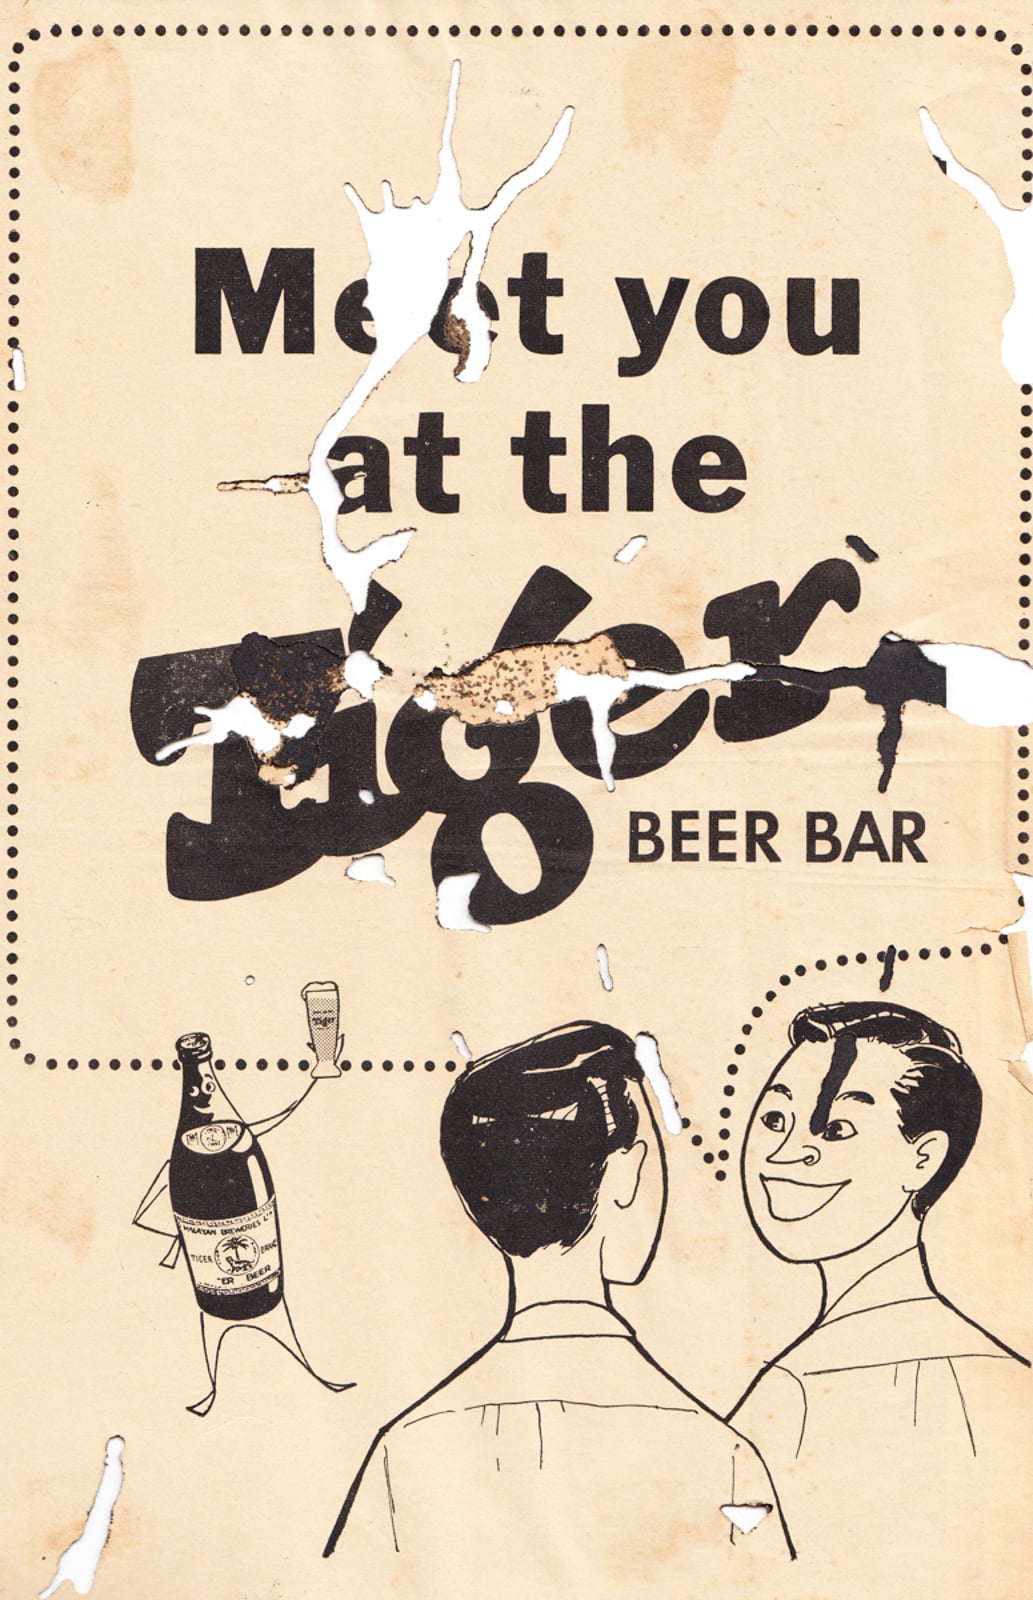 Tiger Beer Bar Advertisement